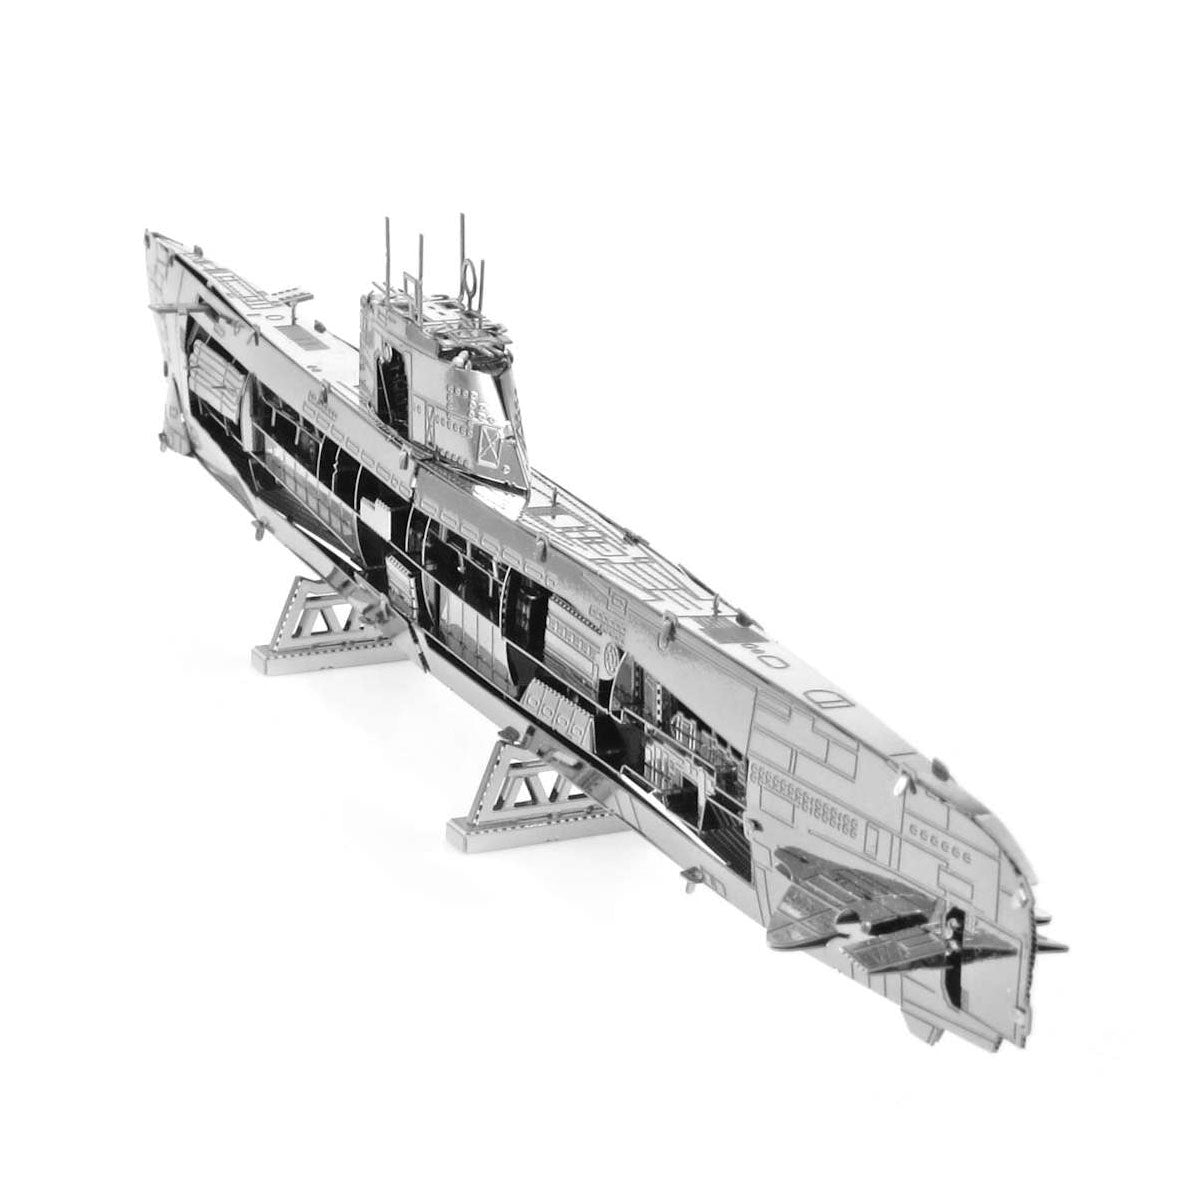 German U-Boat Type XXI